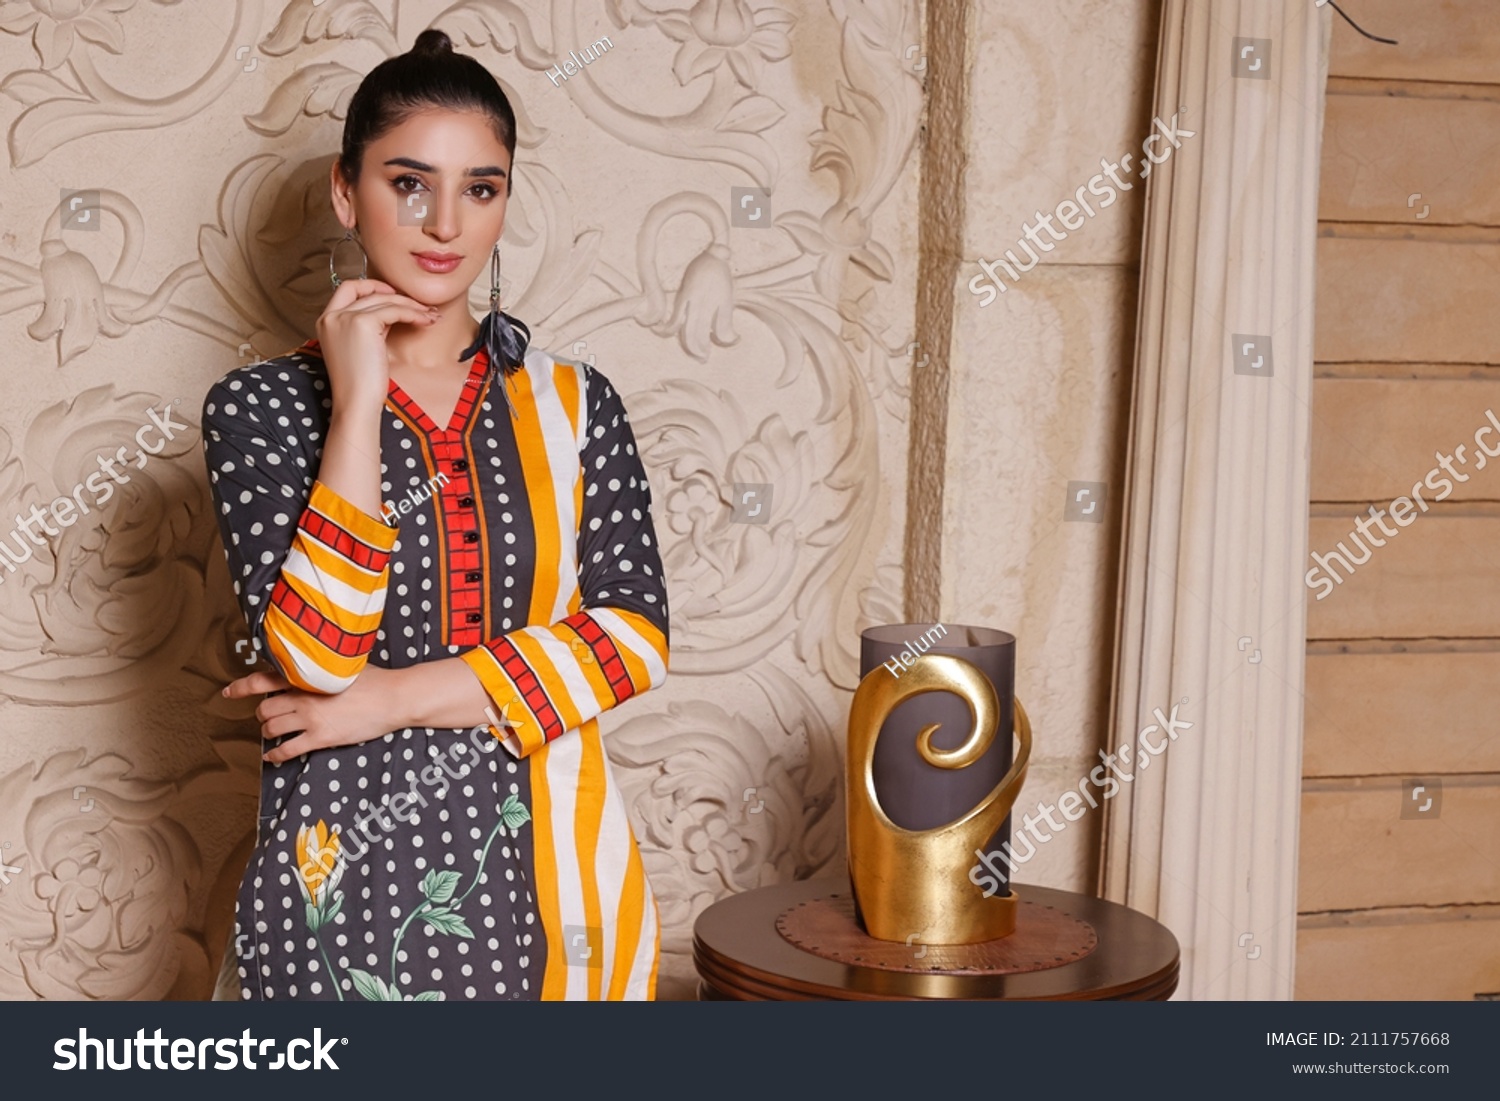 A Pakistani Model is wearing traditional dress Shalwar kameez - Kurti #2111757668